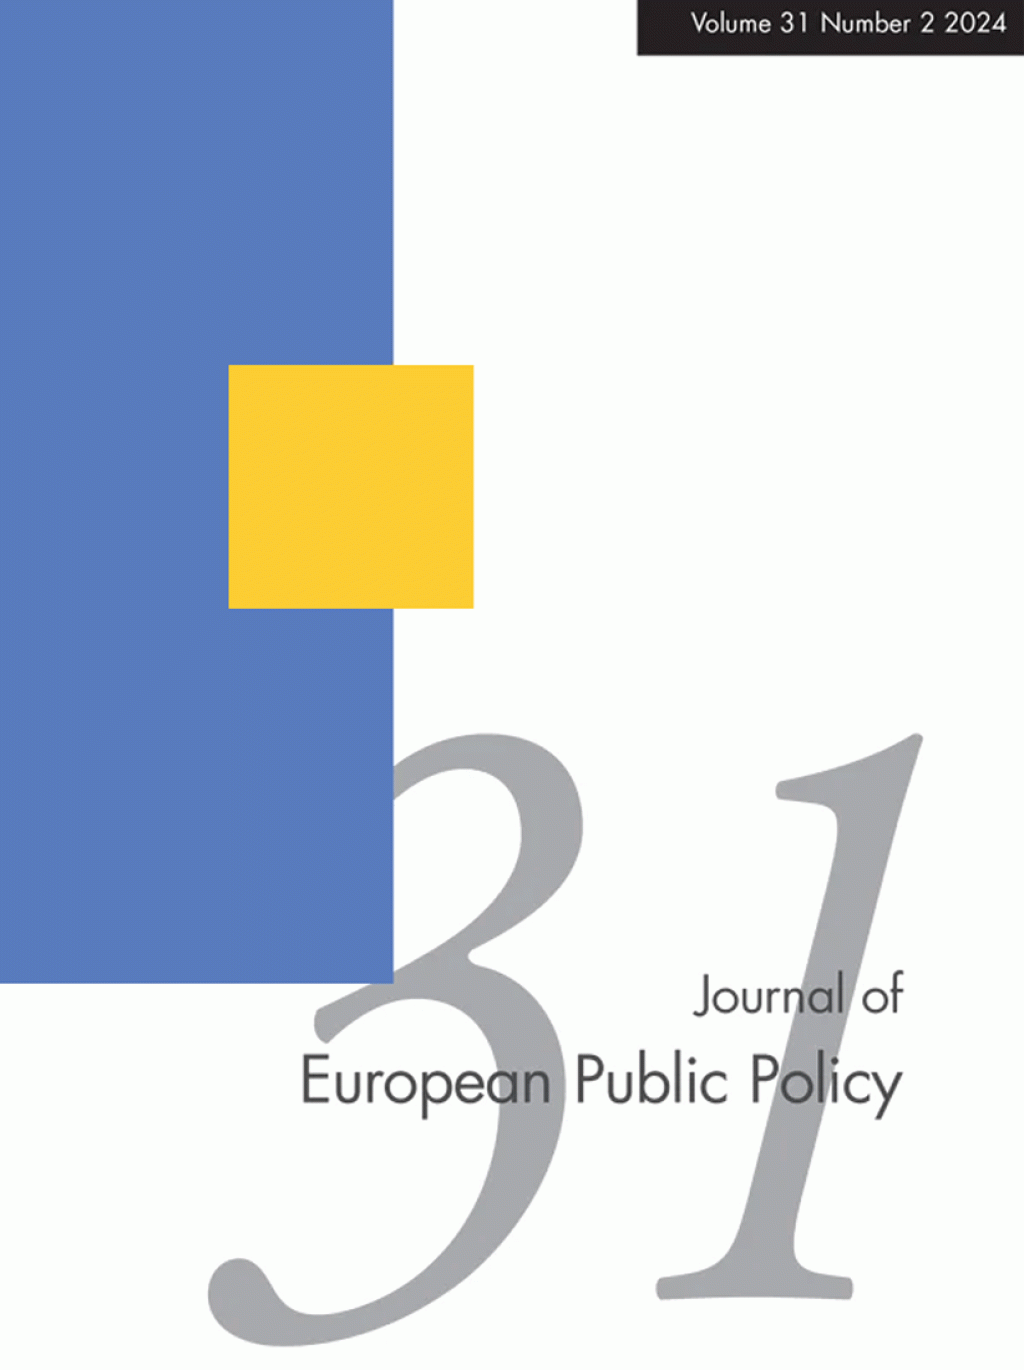 JournalofEuropeanPublicPolicy